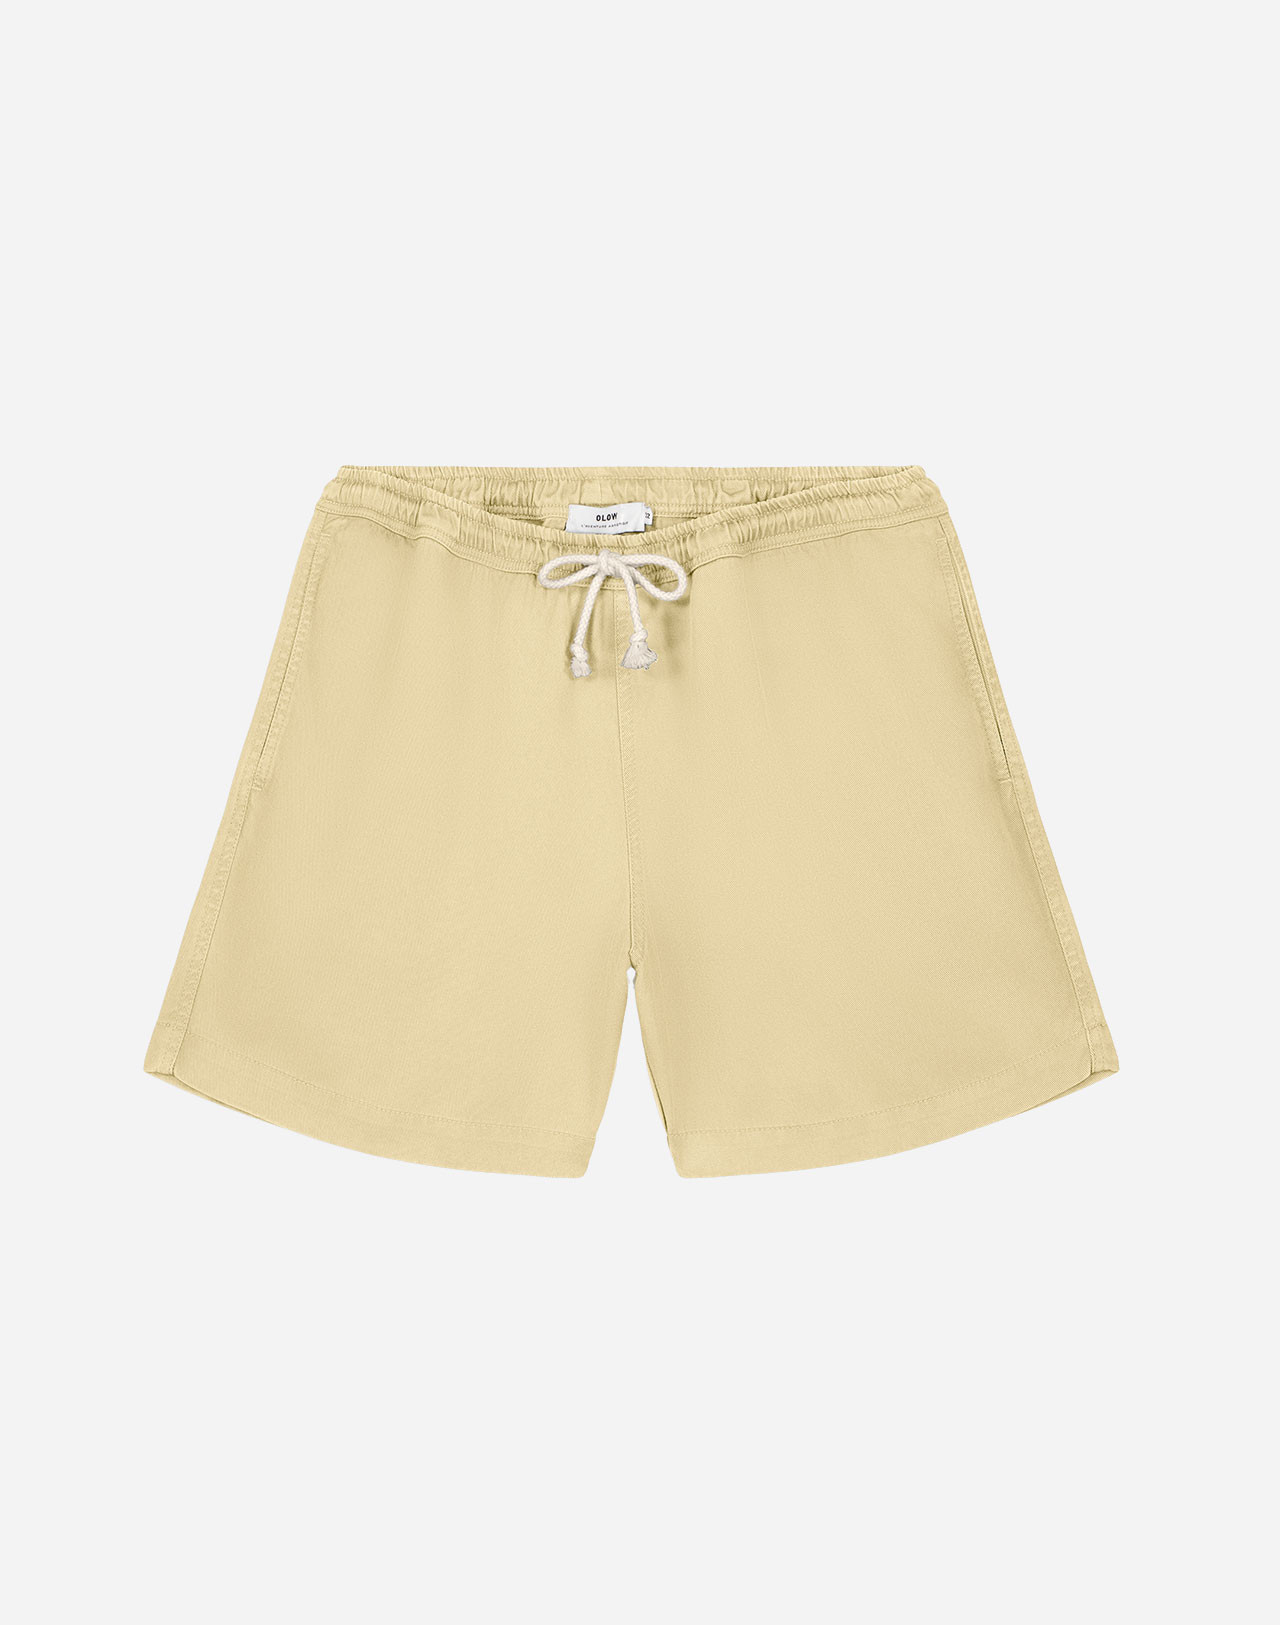 OLOW Pastel Yellow Bodhi Shorts